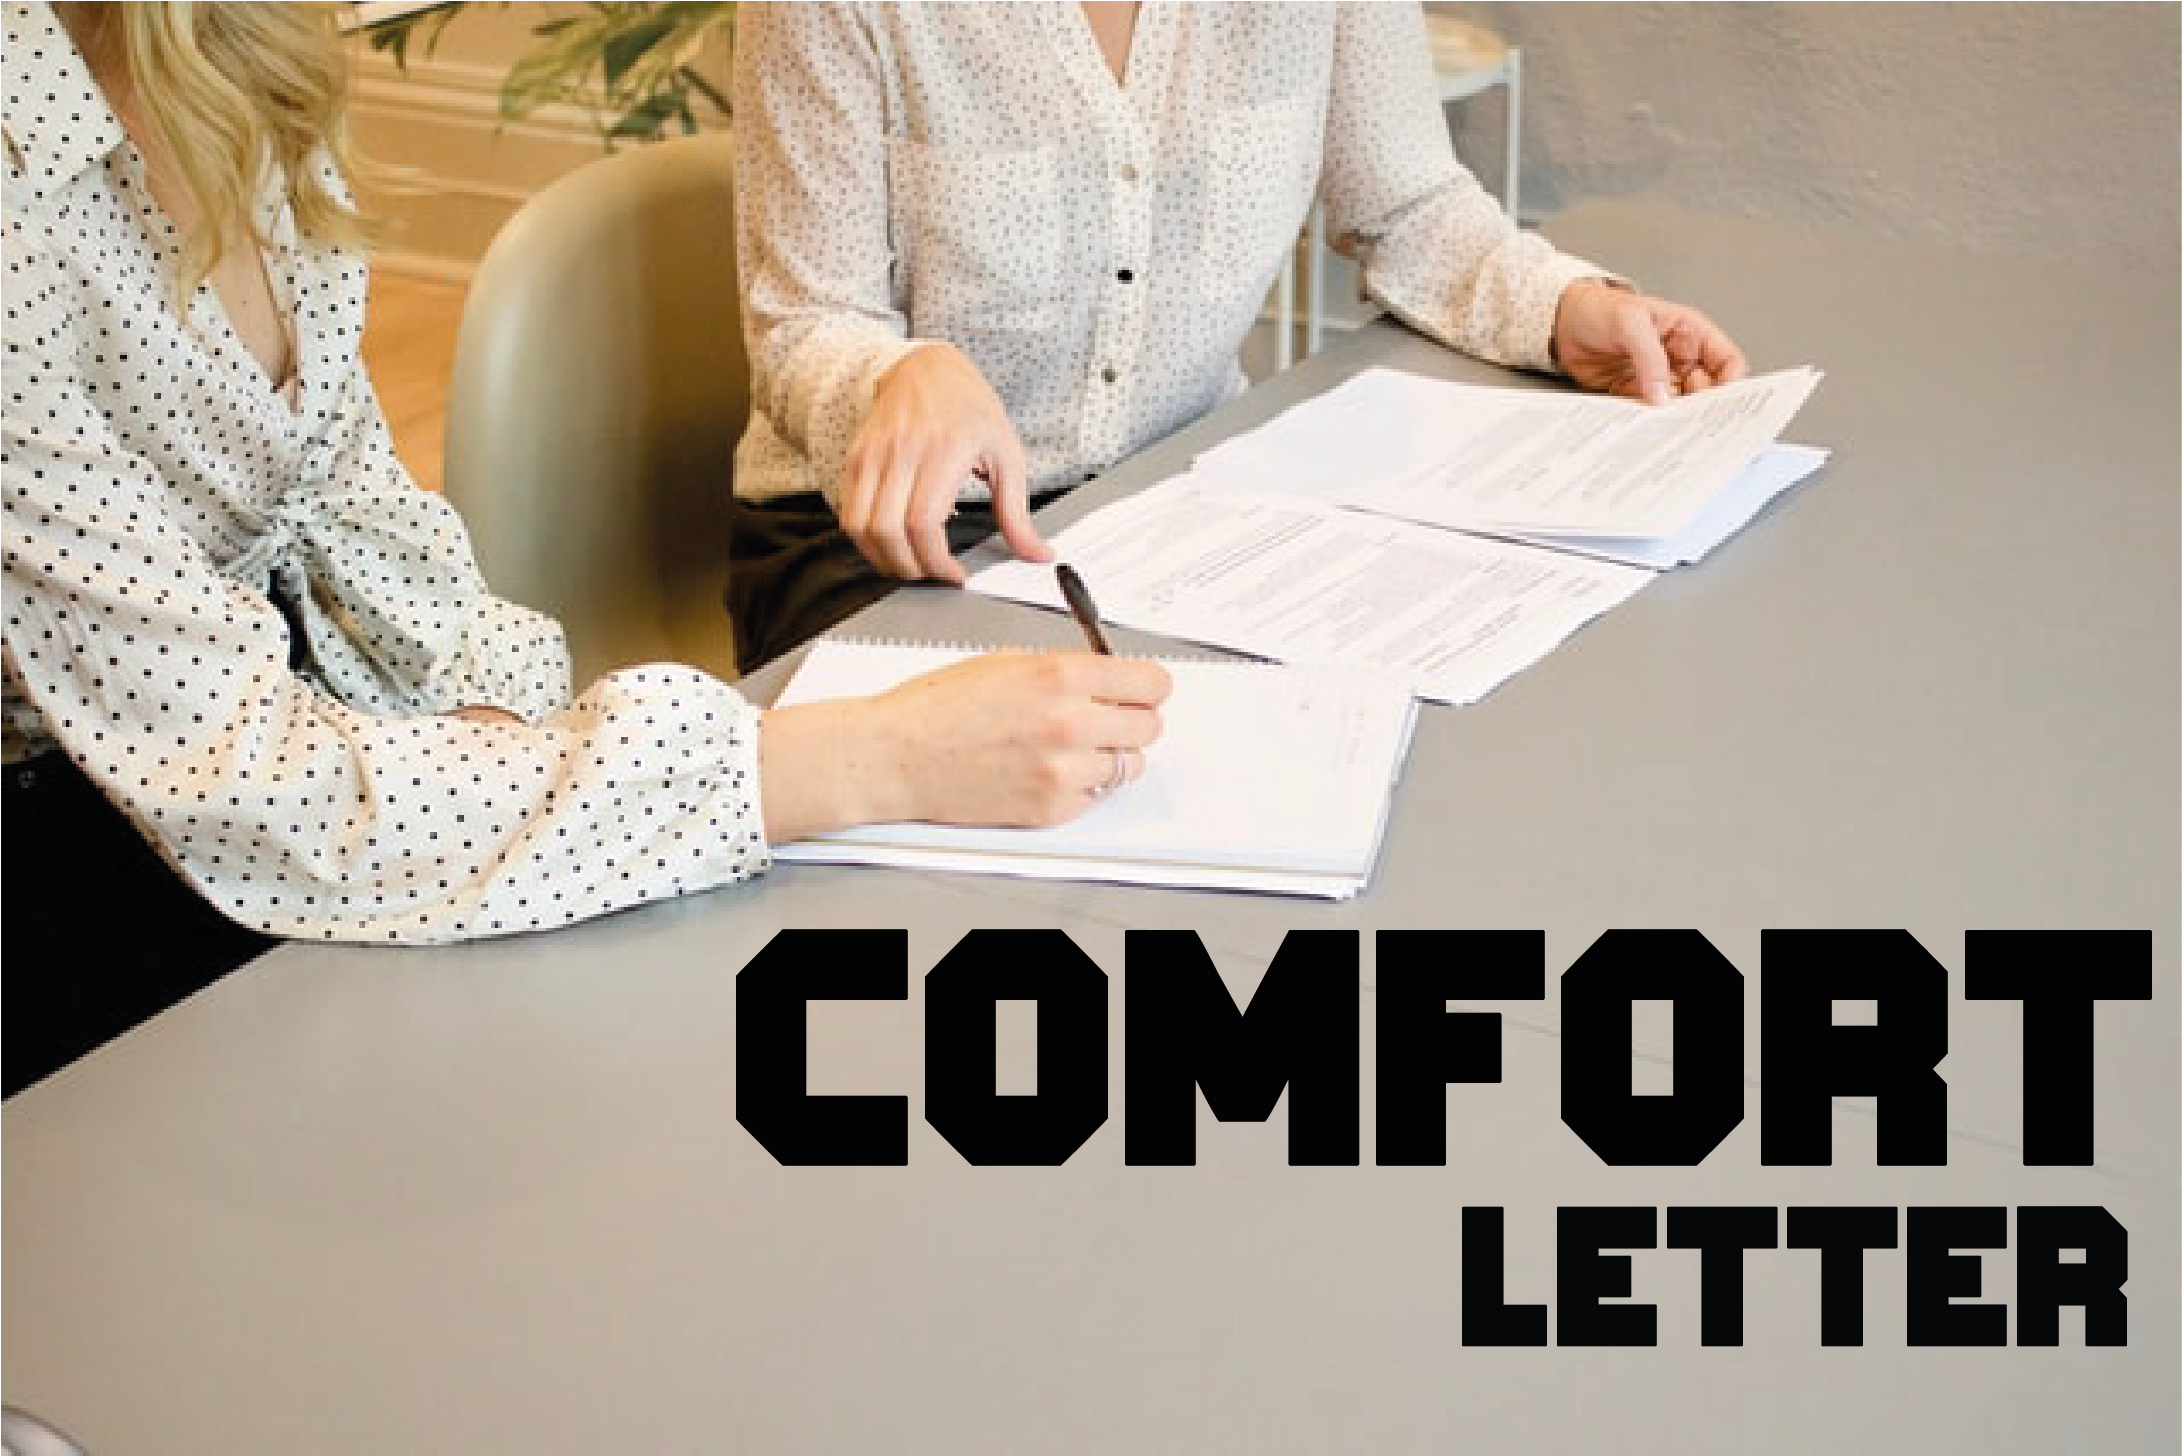 Comfort Letter